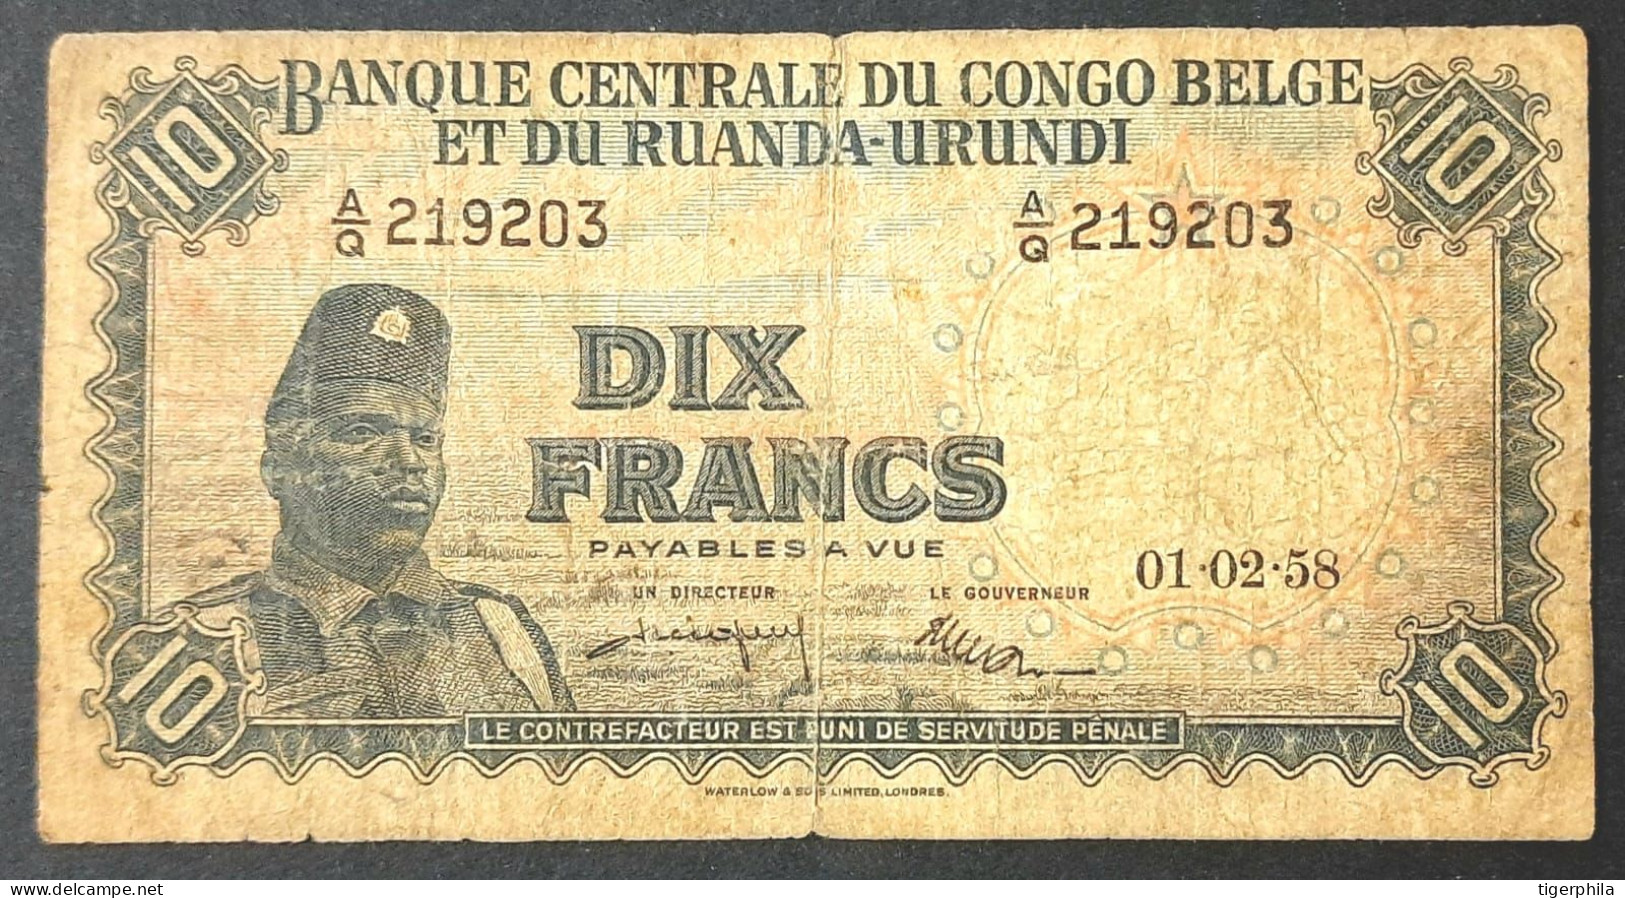 BELGIAN CONGO & RUANDA URUNDI 1958 10 Francs Used Note - Belgian Congo Bank